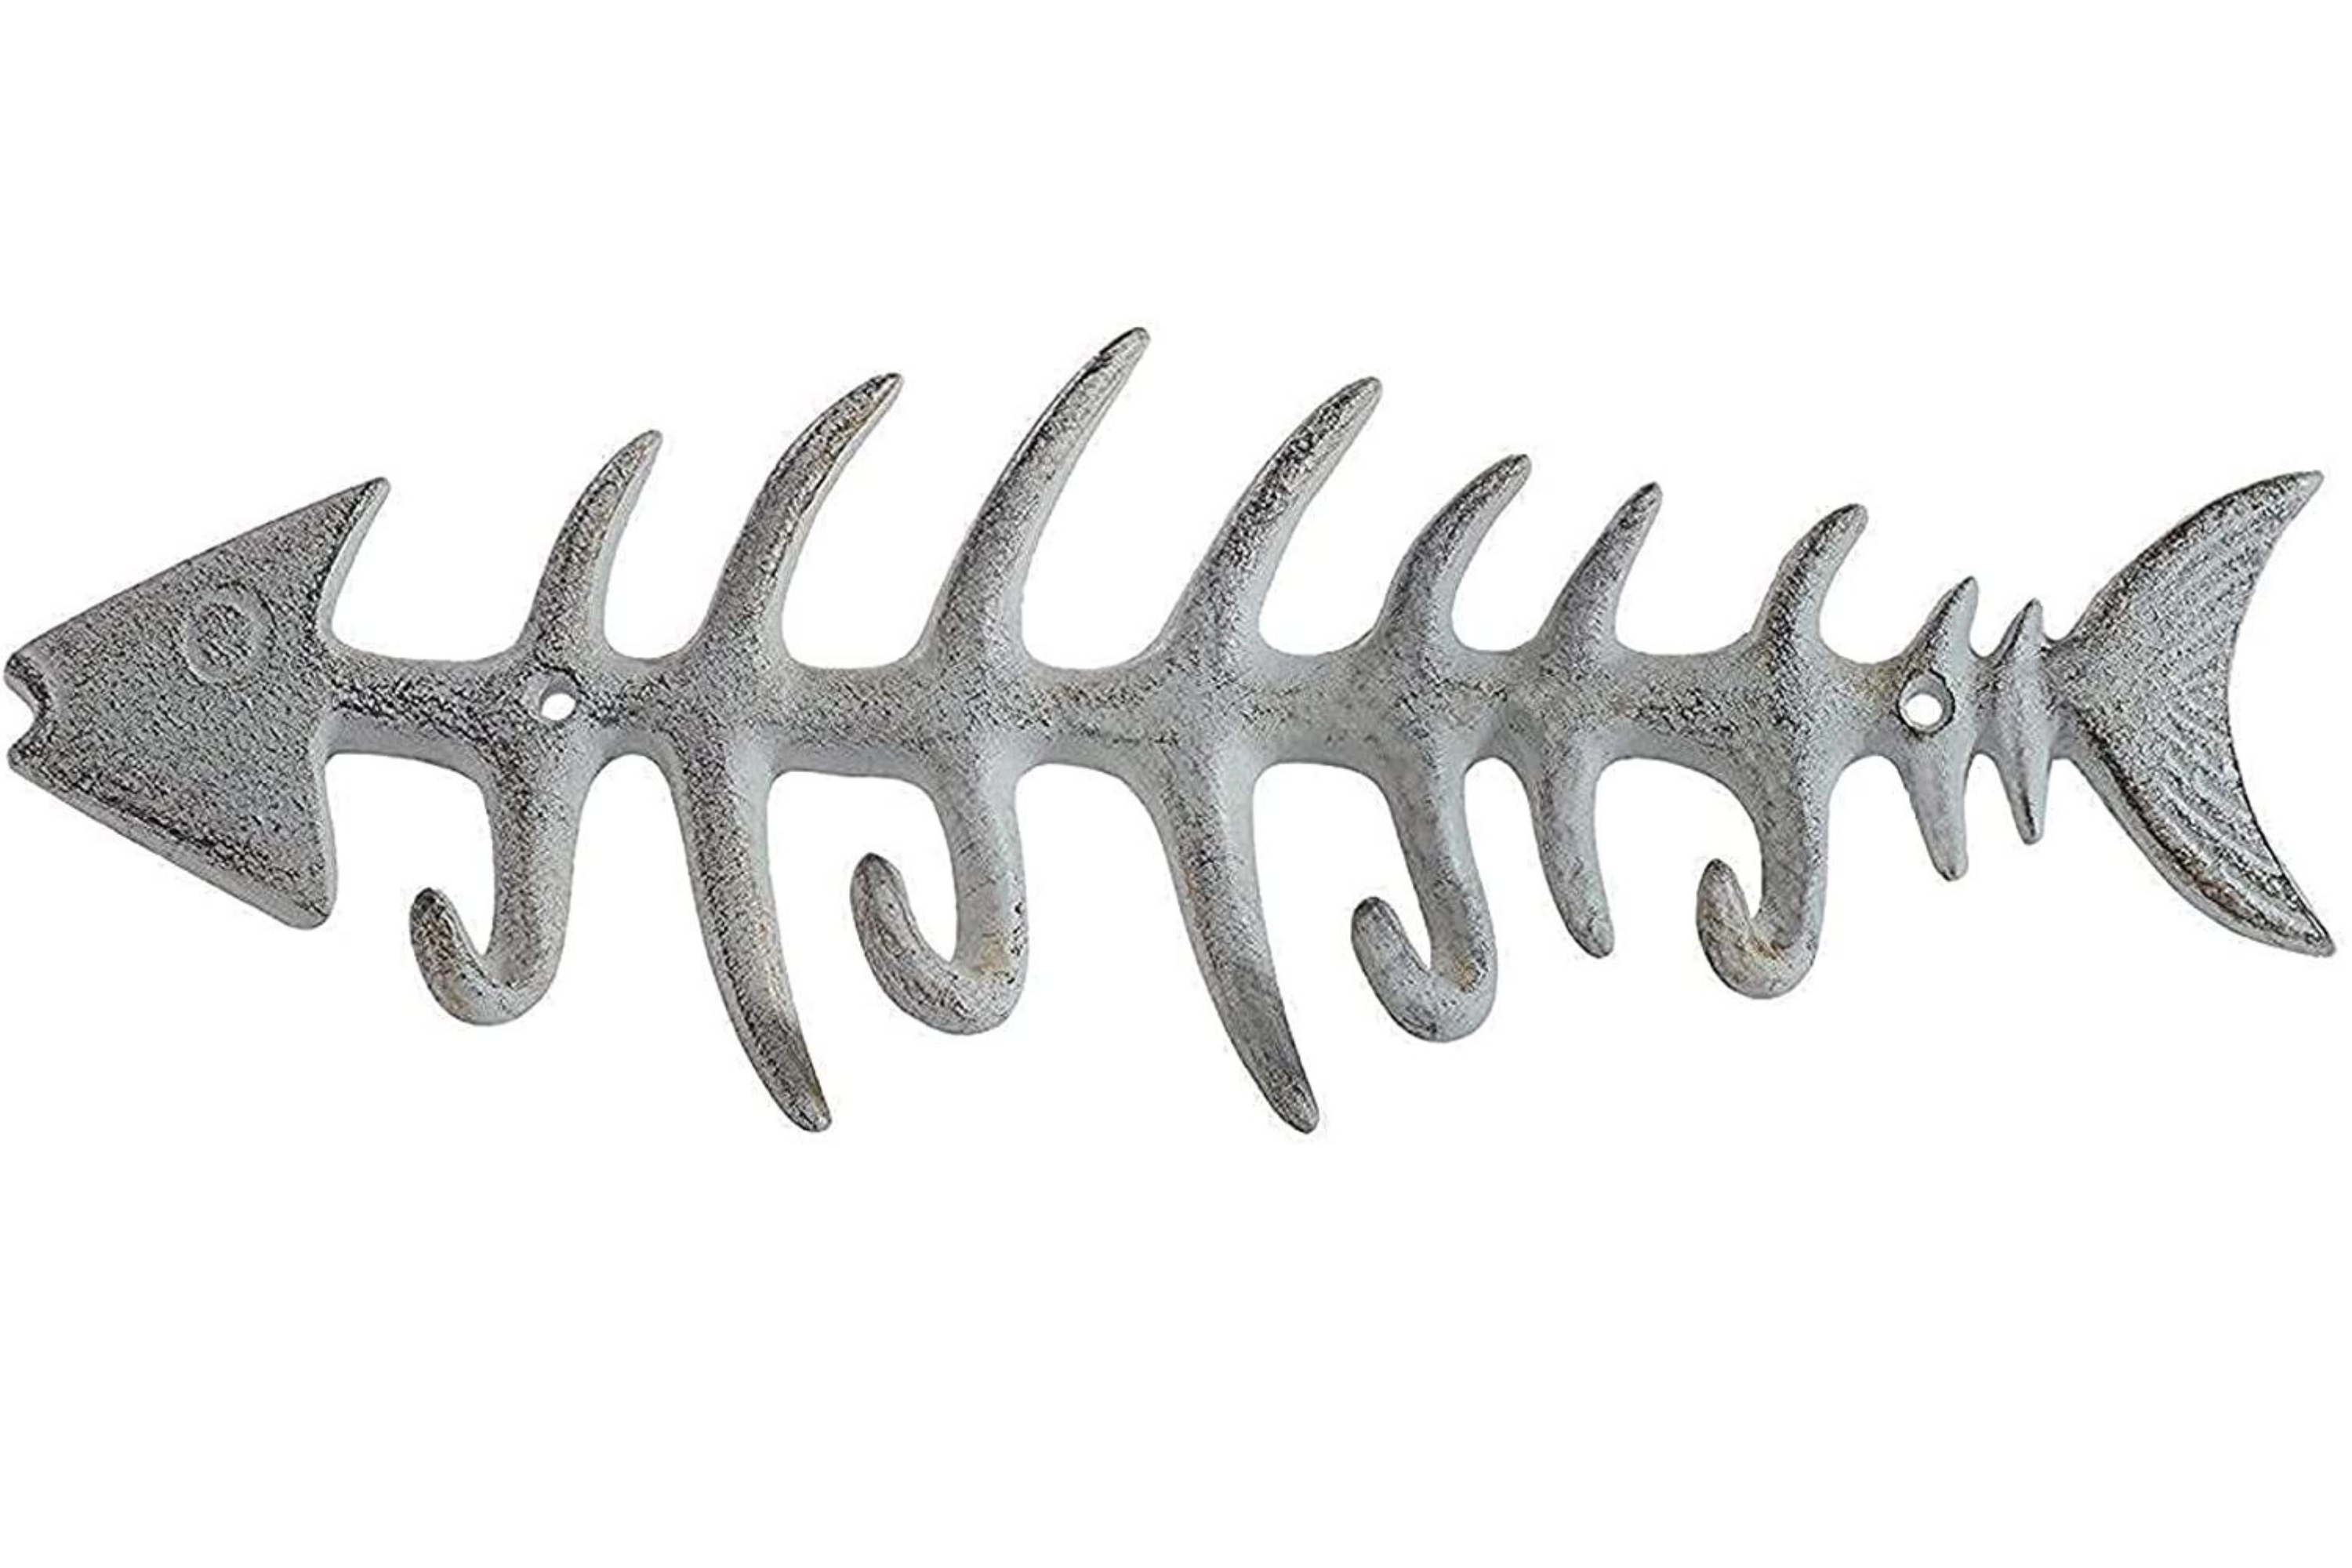 Decorative Cast Iron Hanger w/ 4 “Fish Bones” Hooks– Comfify